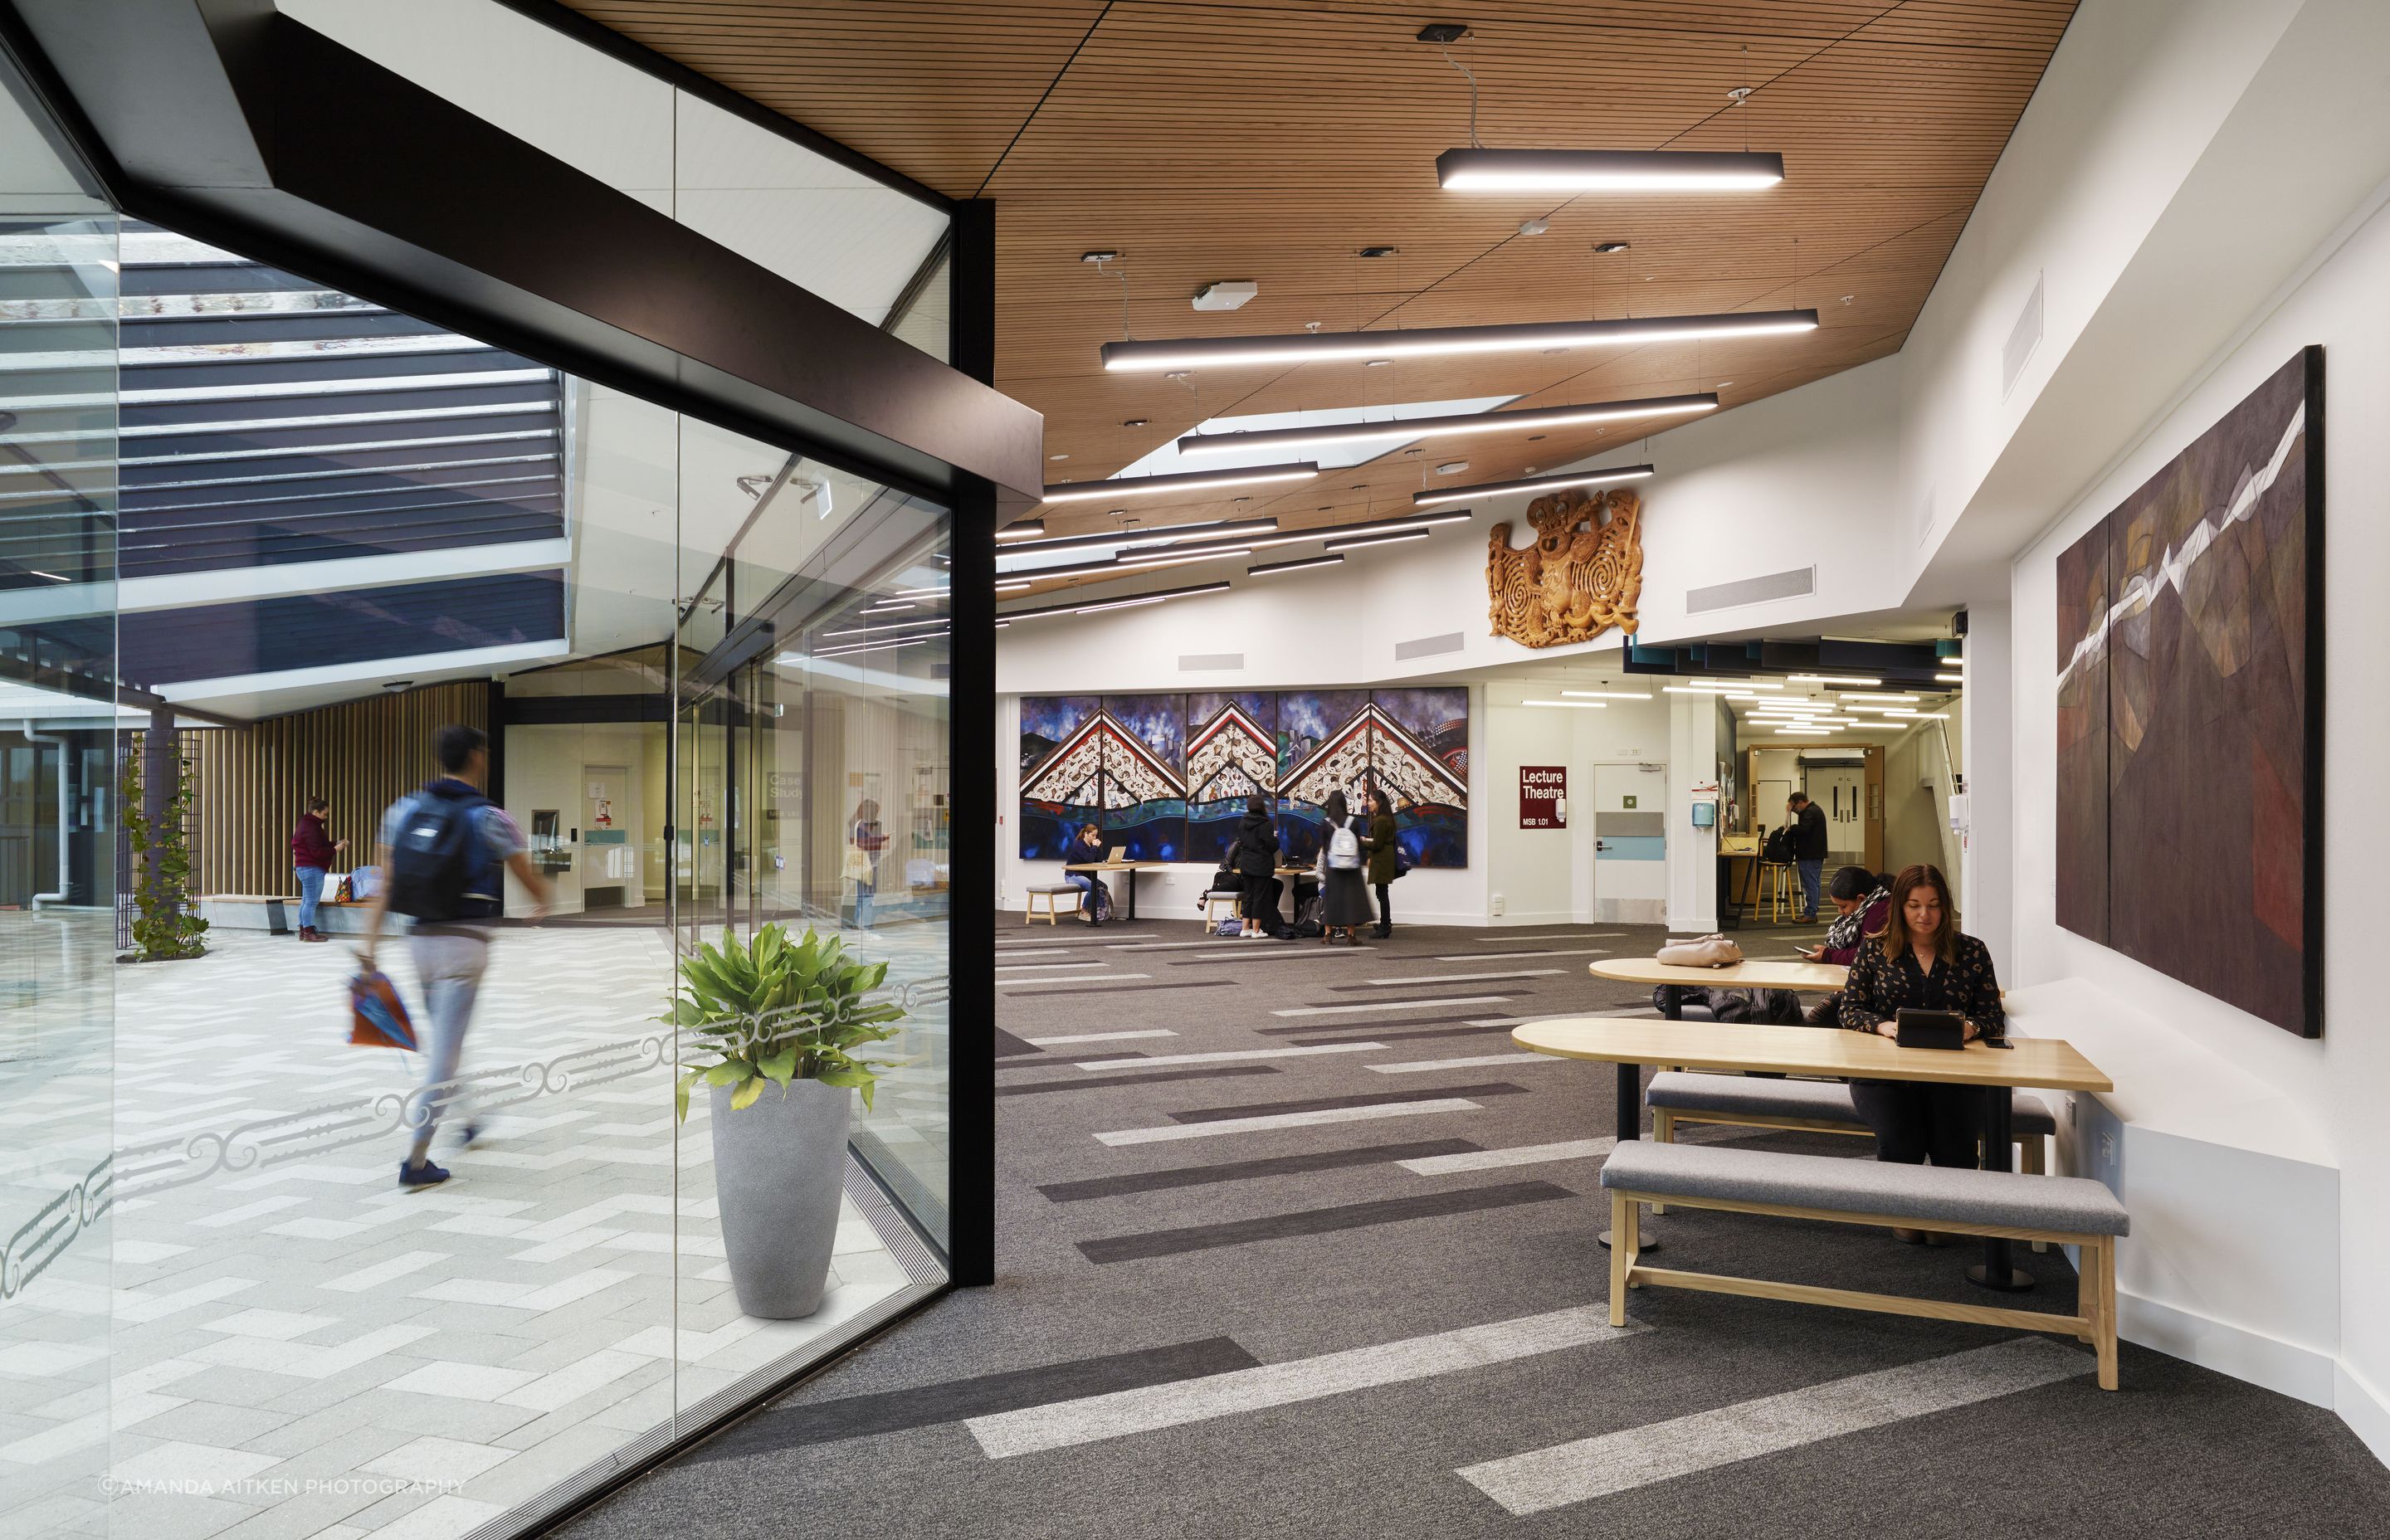 The University of Waikato, Waikato Management School